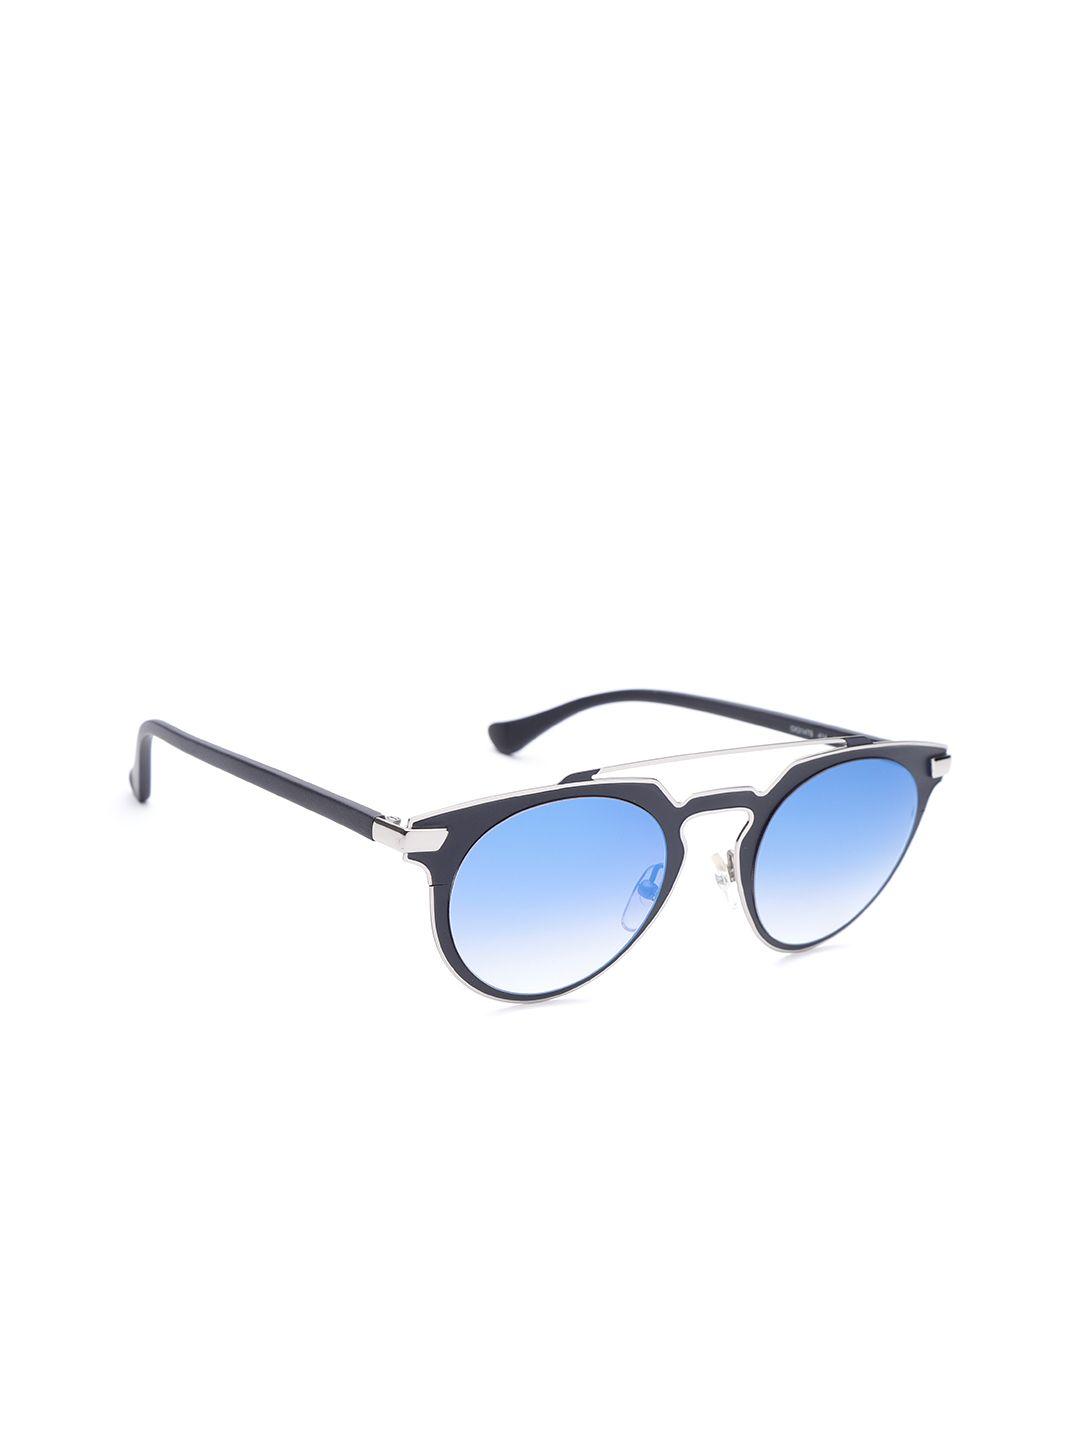 calvin-klein-women-oval-sunglasses-ck-2147-414-48-s